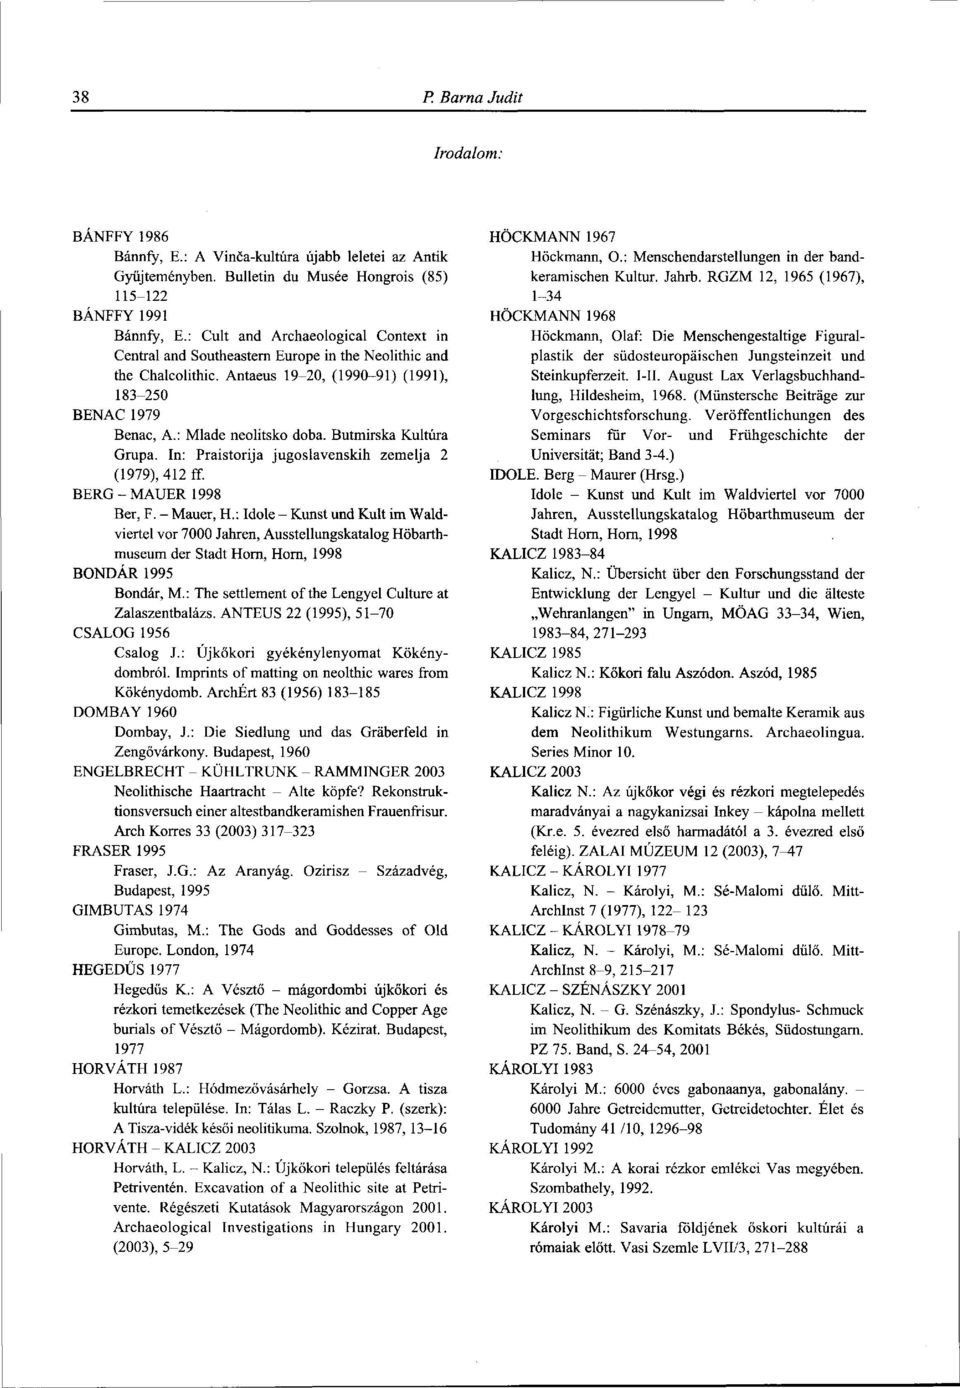 Butmirska Kultúra Grupa. In: Praistorija jugoslavenskih zemelja 2 (1979), 412 ff. BERG-MAUER 1998 Ber, F. - Mauer, H.